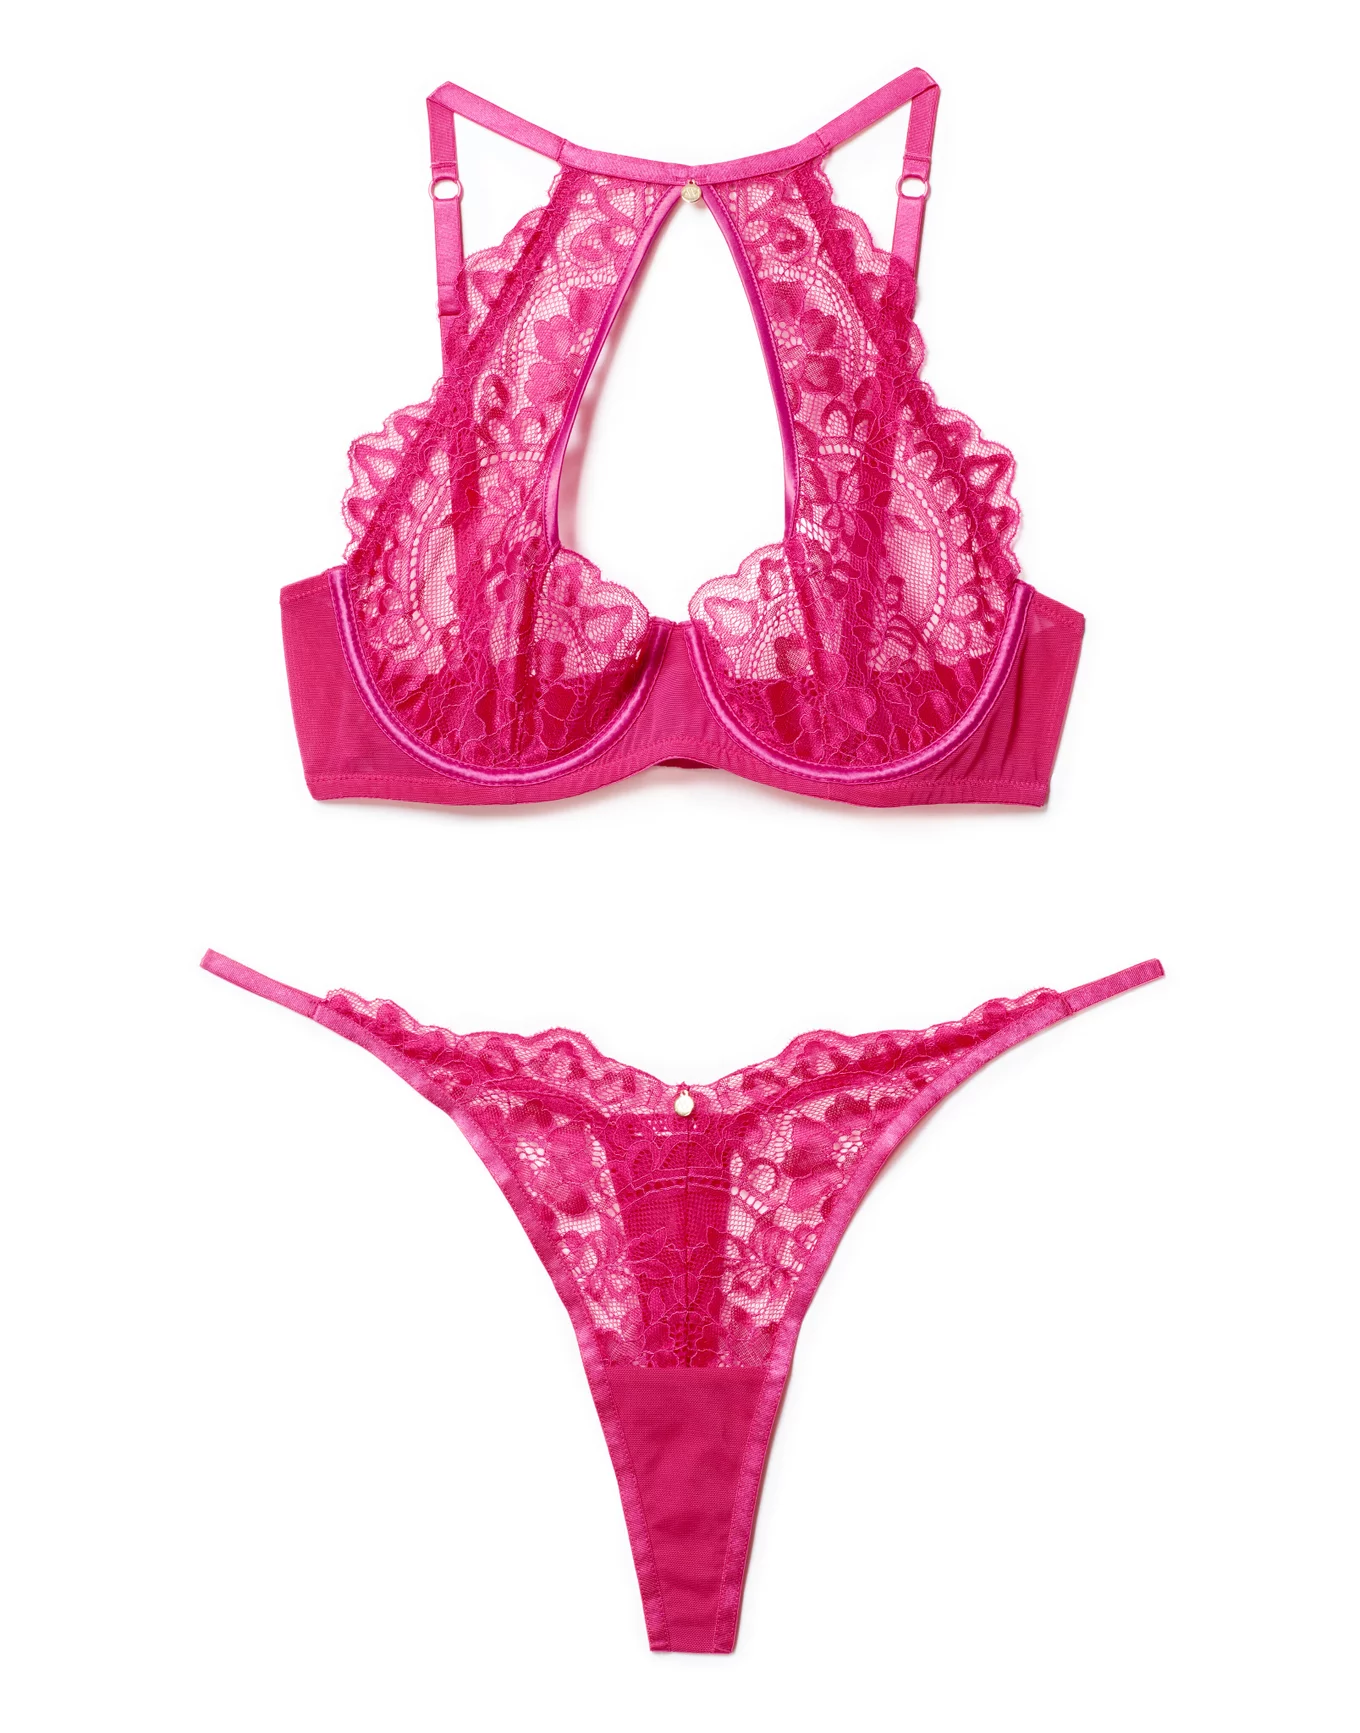 Lace Free Shipping Lingerie Set Lace Pink Bra Bralette Panties